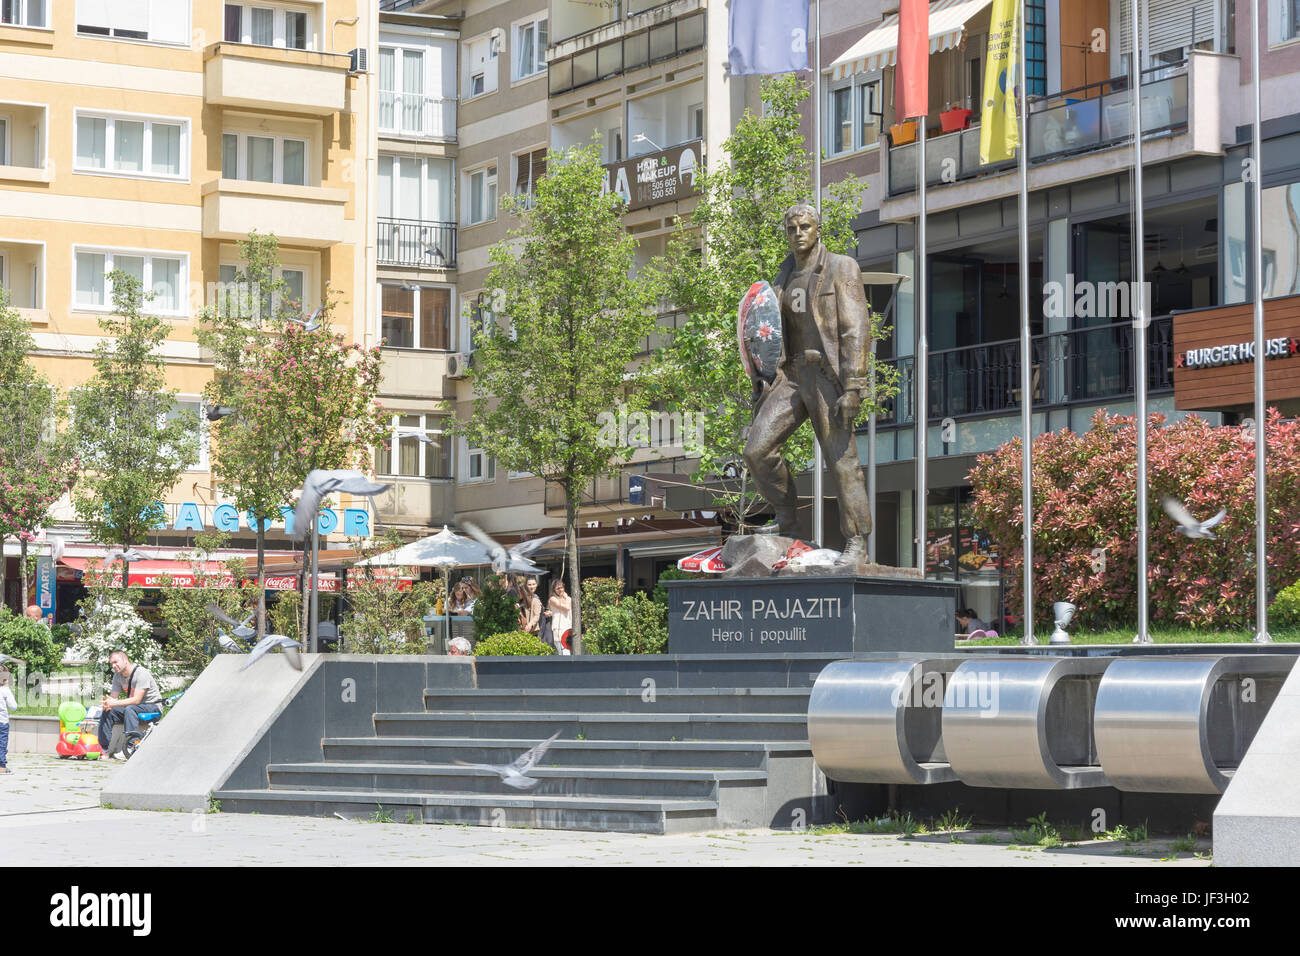 Zahir Pajaziti statue (former commander of the Kosovo Liberation Army), Sheshi Zahir Square, Pristina (Prishtina), Republic of Kosovo Stock Photo